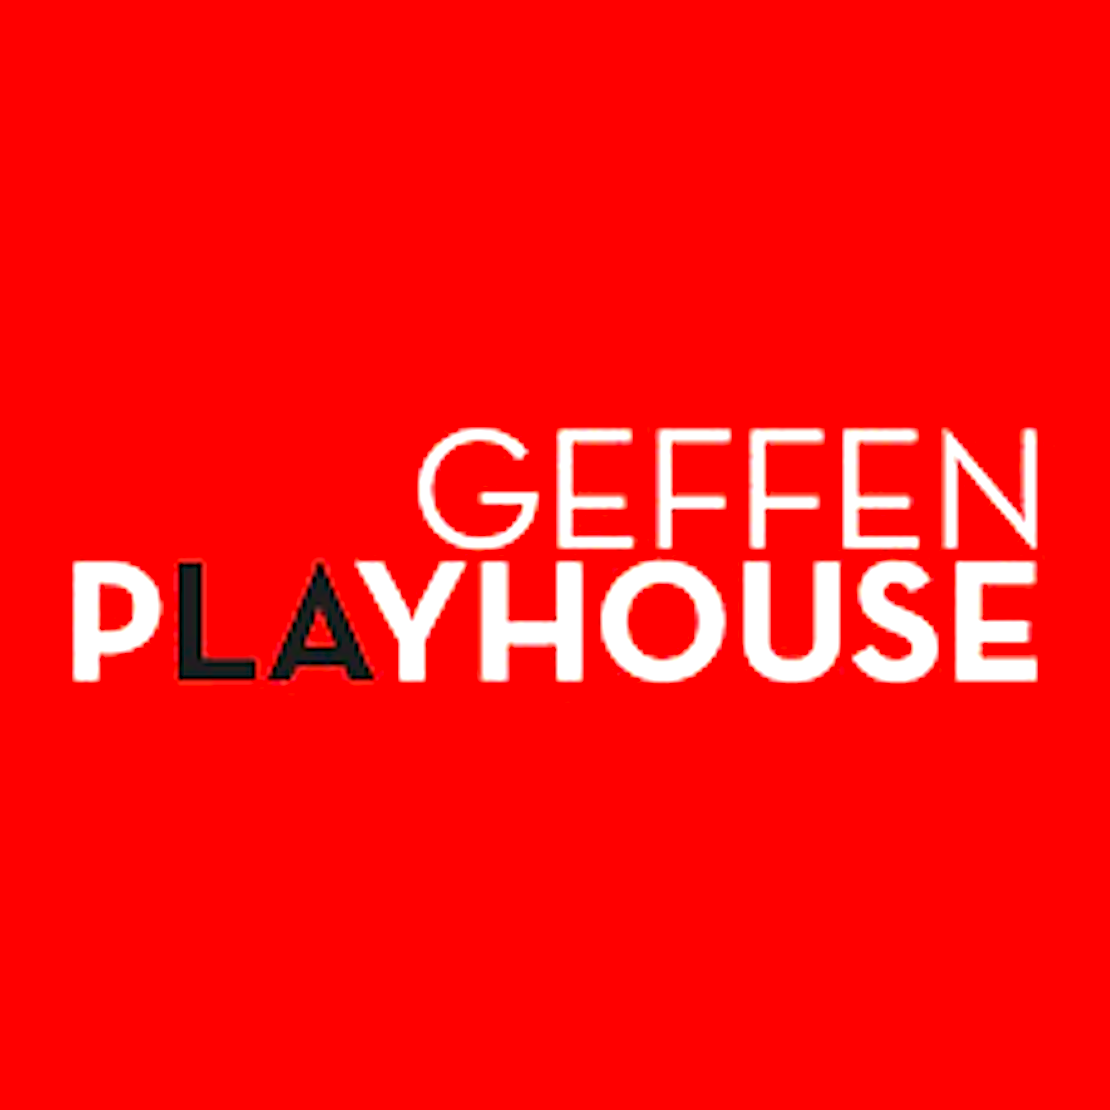 The GEFFEN PLAYHOUSE